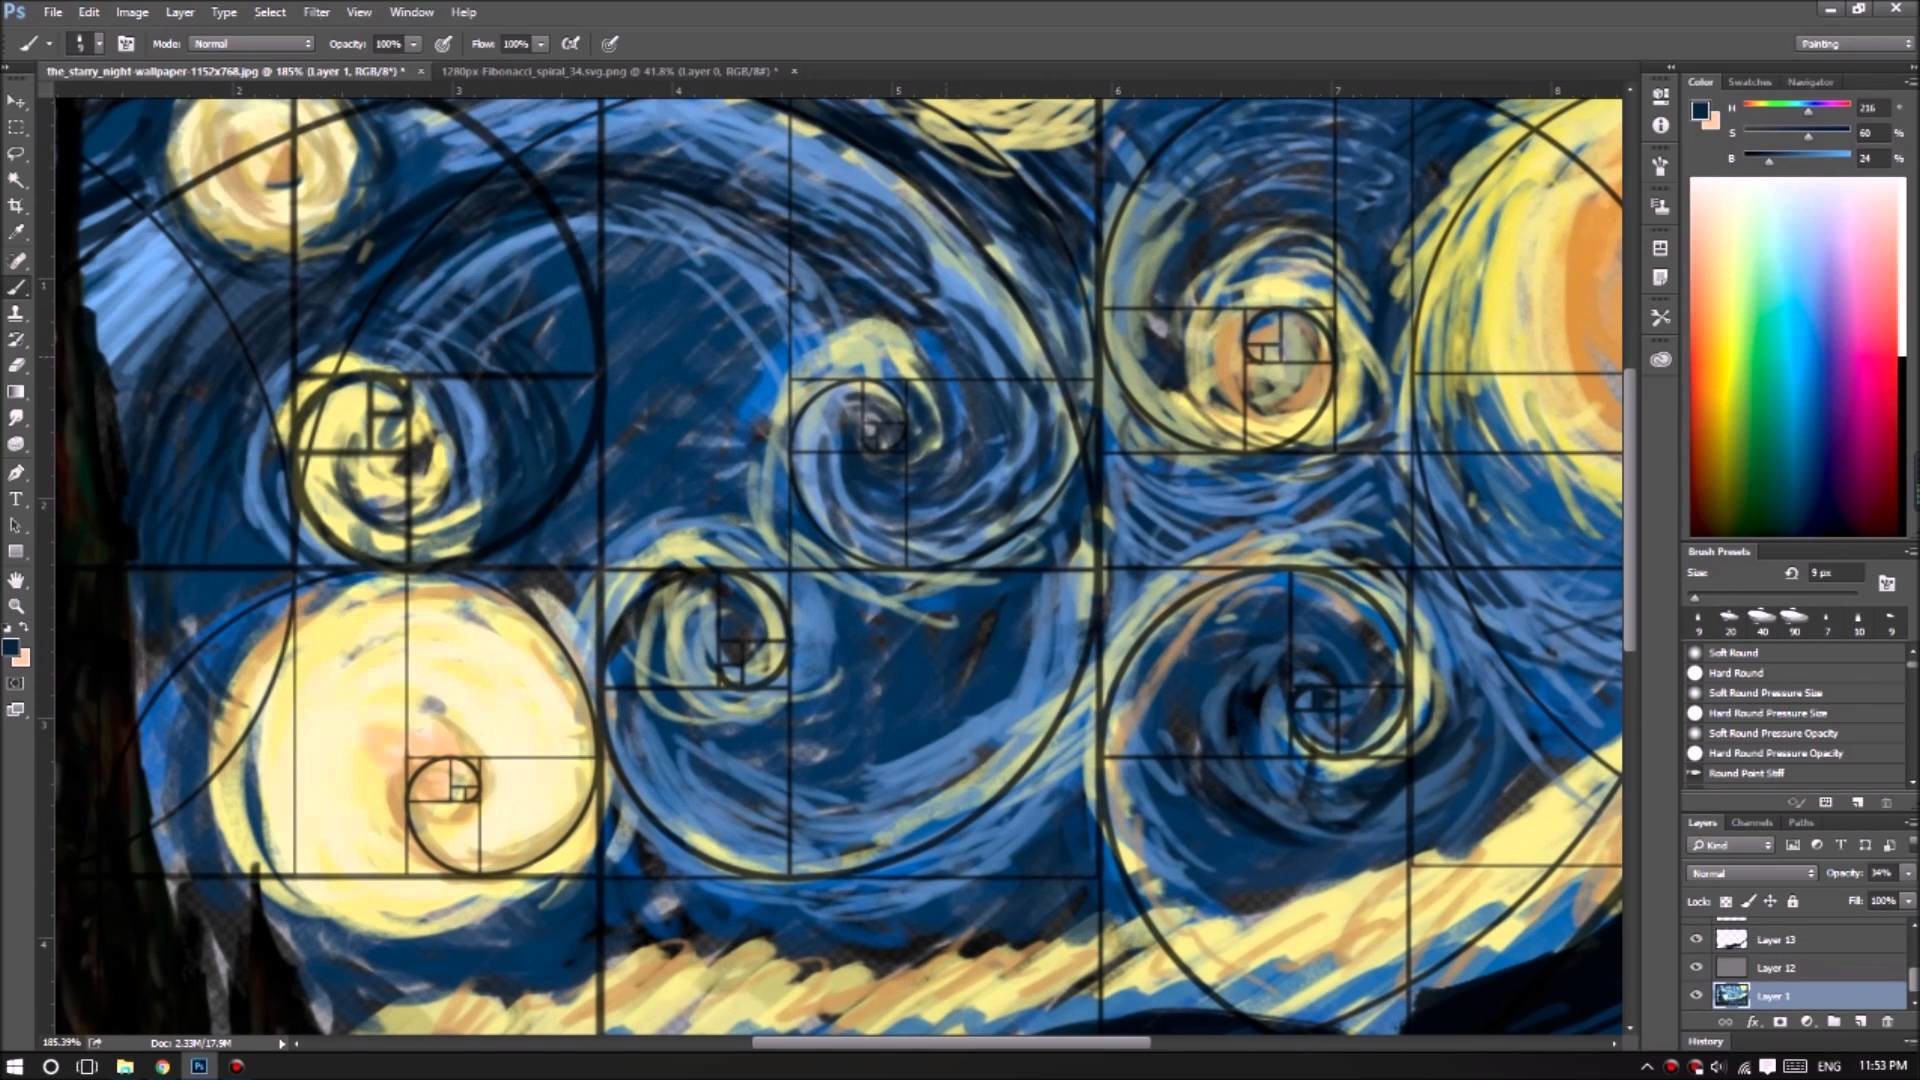 1920x1080 When "Golden Spiral" applies to "Starry Night"